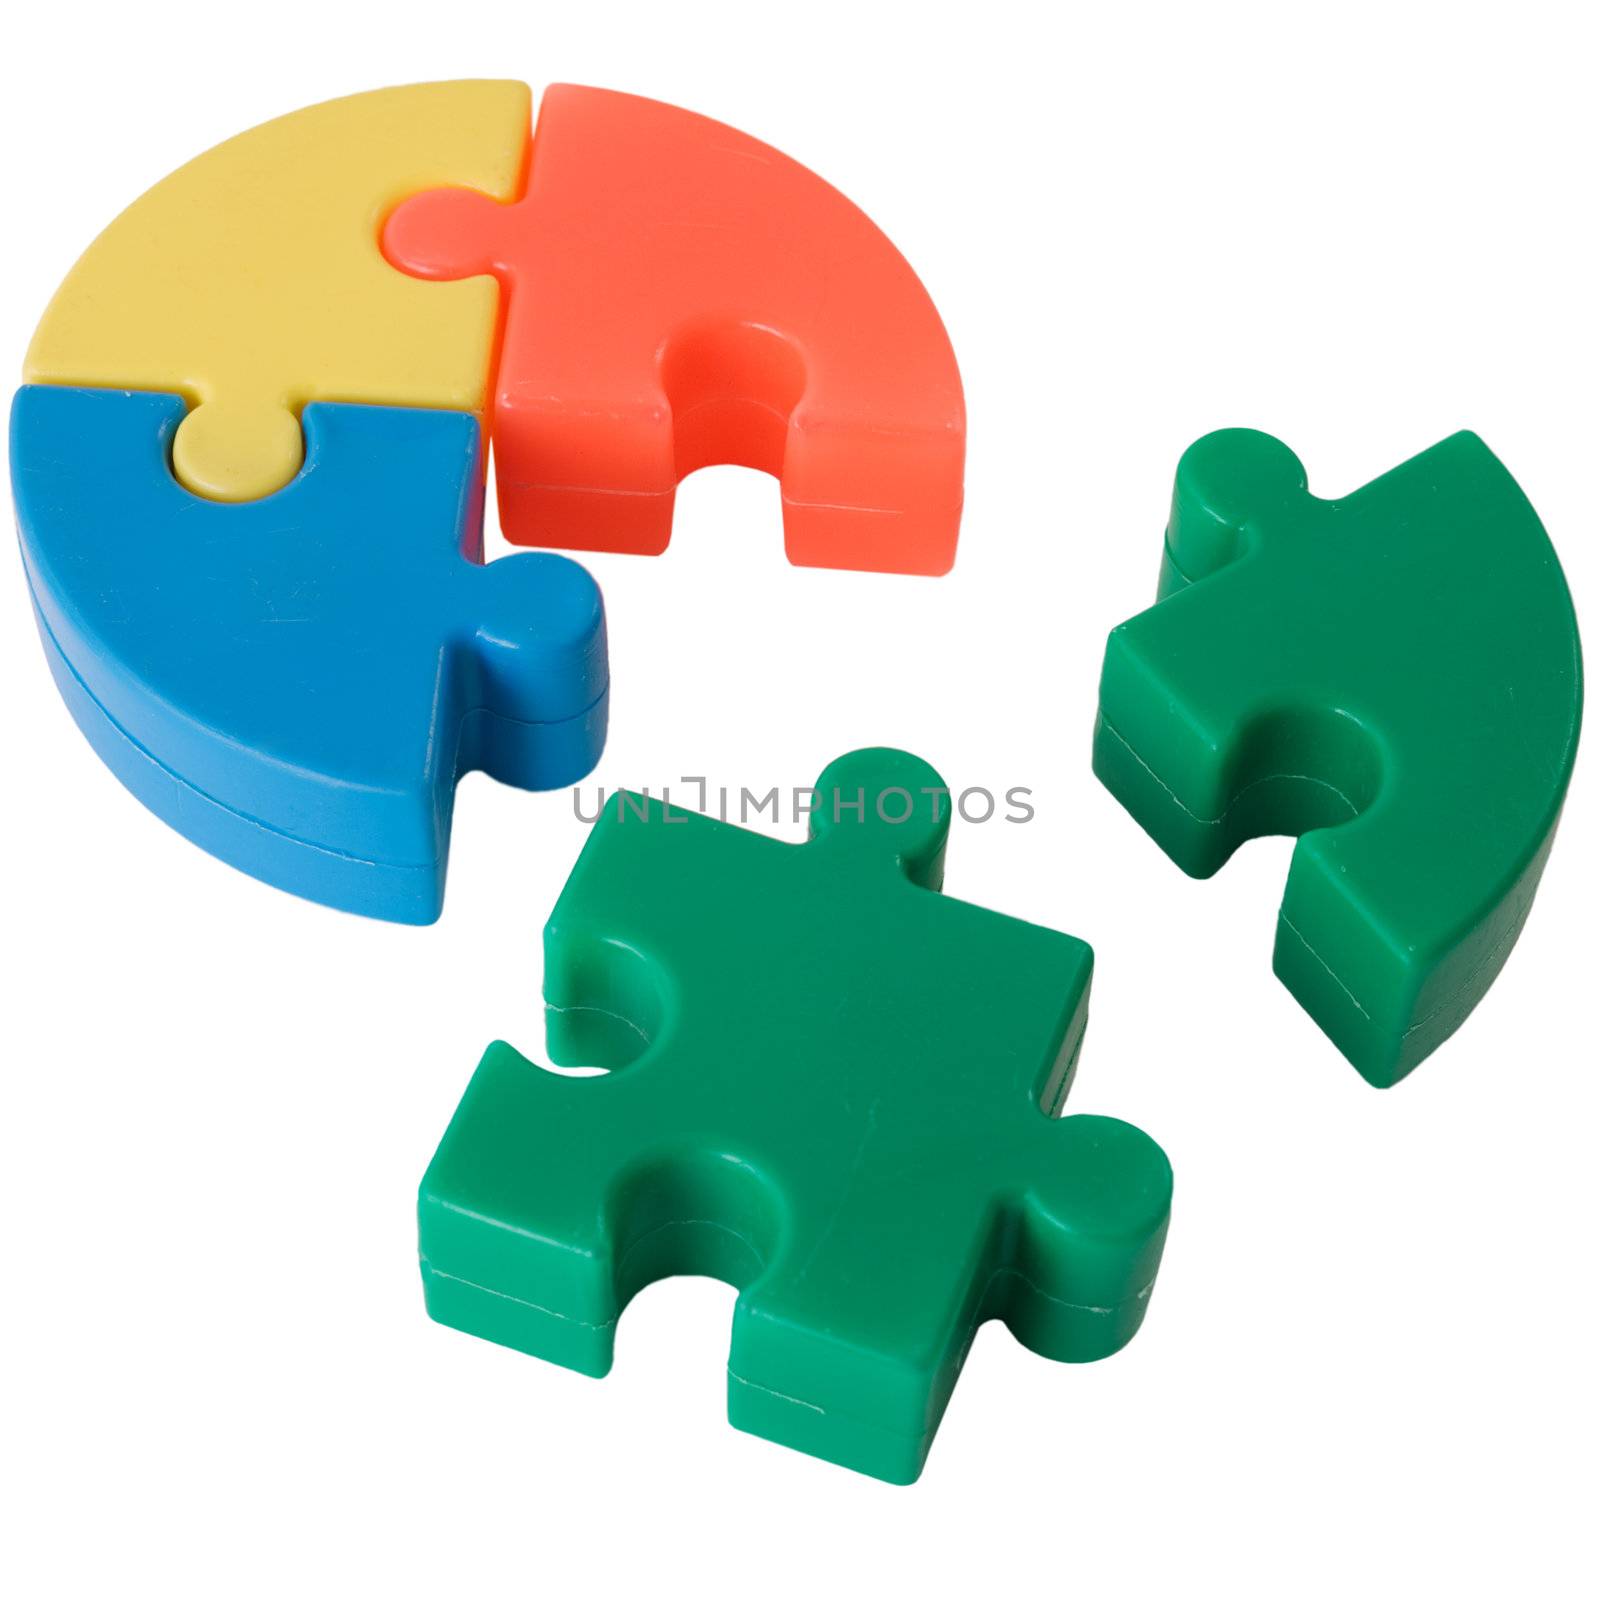 Multi-coloure slices plastic puzzle on the white background